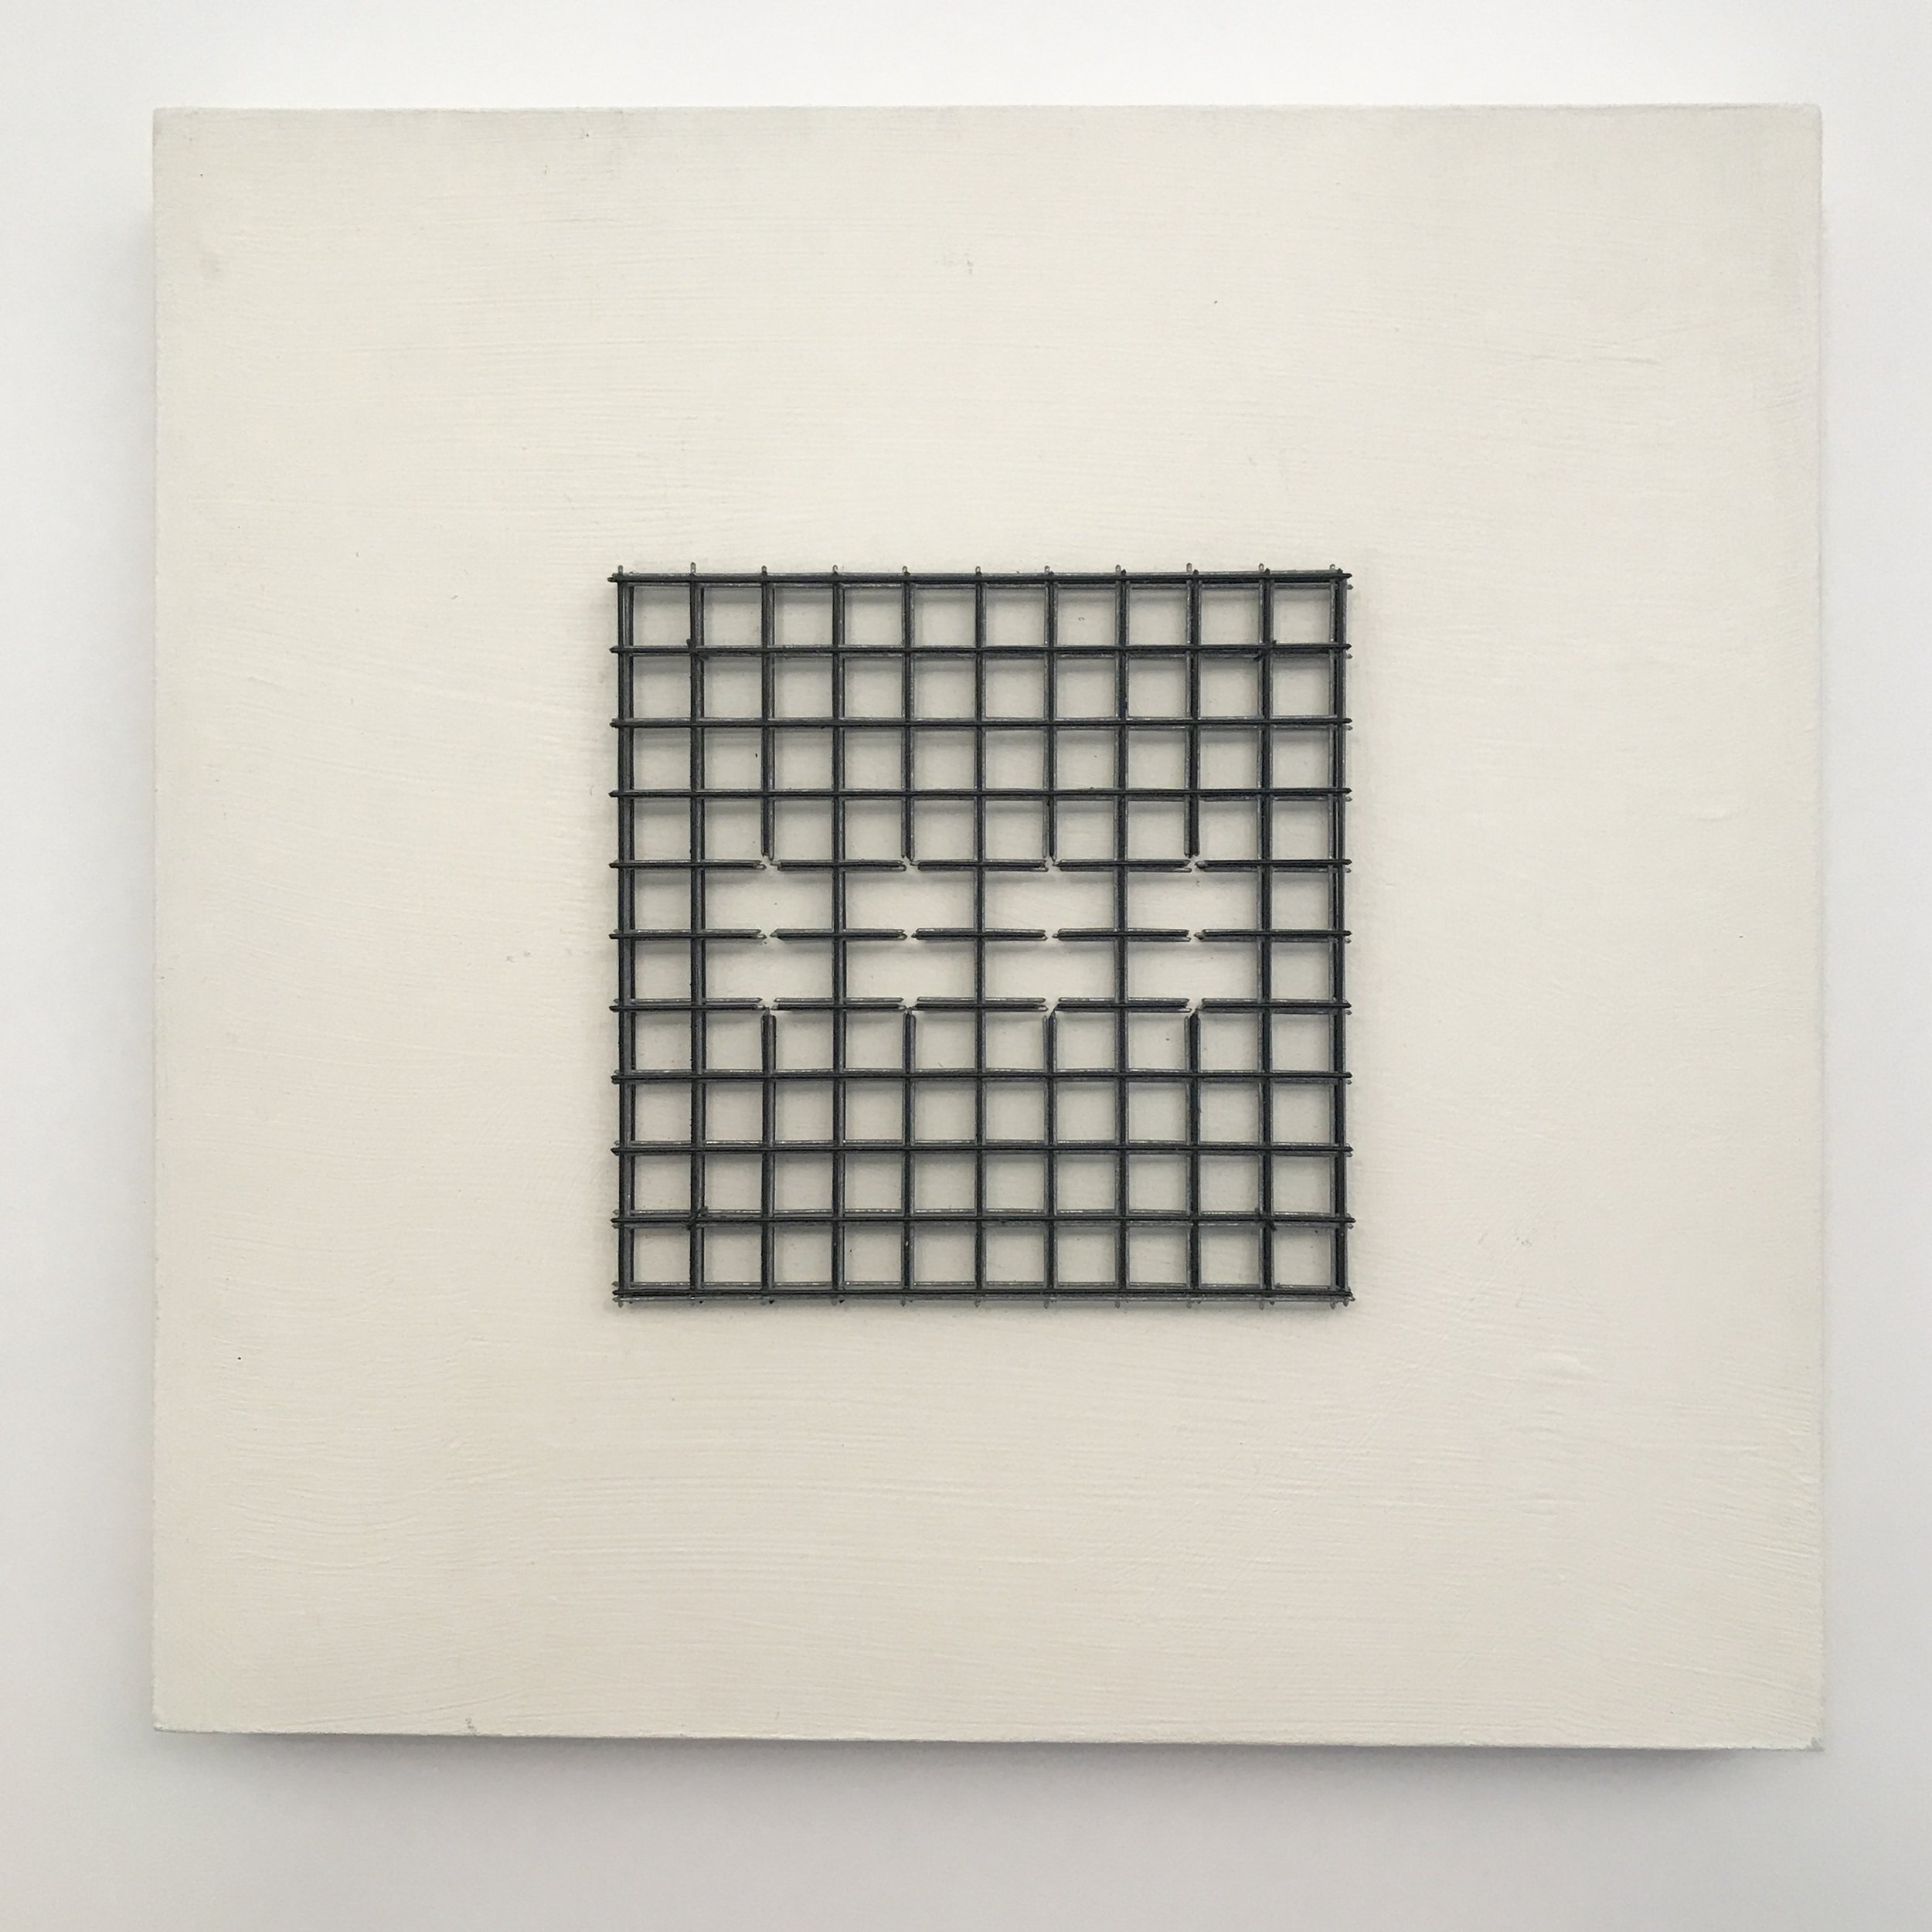  Doug Cross,  Meditation Square  #2,  Wire mesh and wood, 12”x12”x3” 